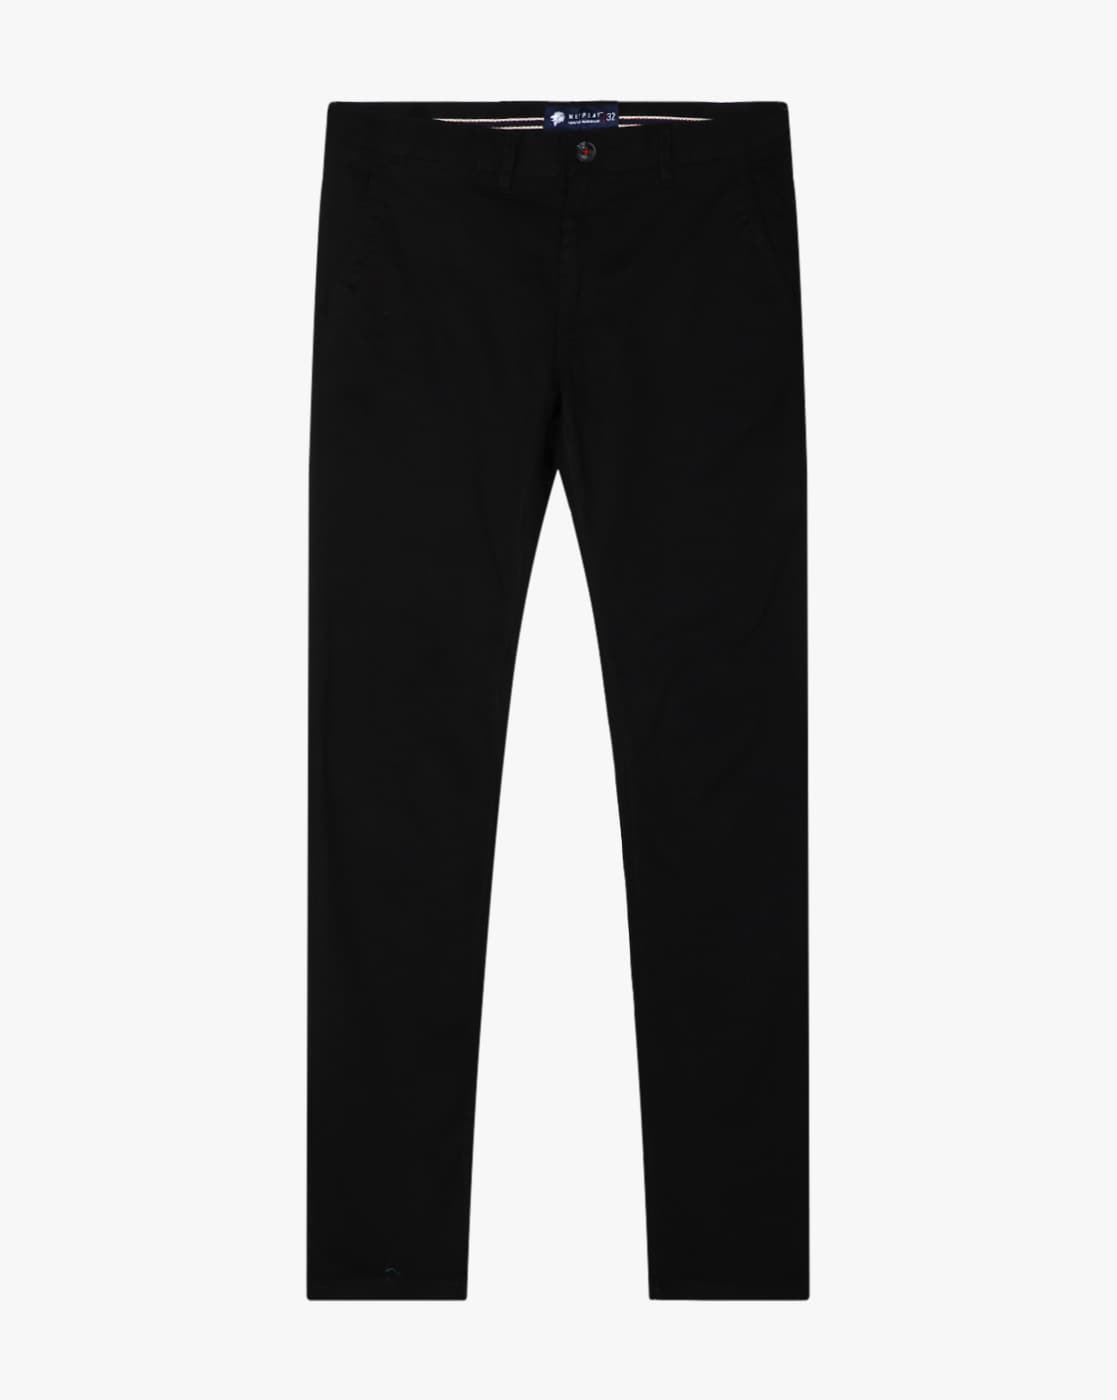 Top more than 85 black slim chino pants super hot - in.eteachers